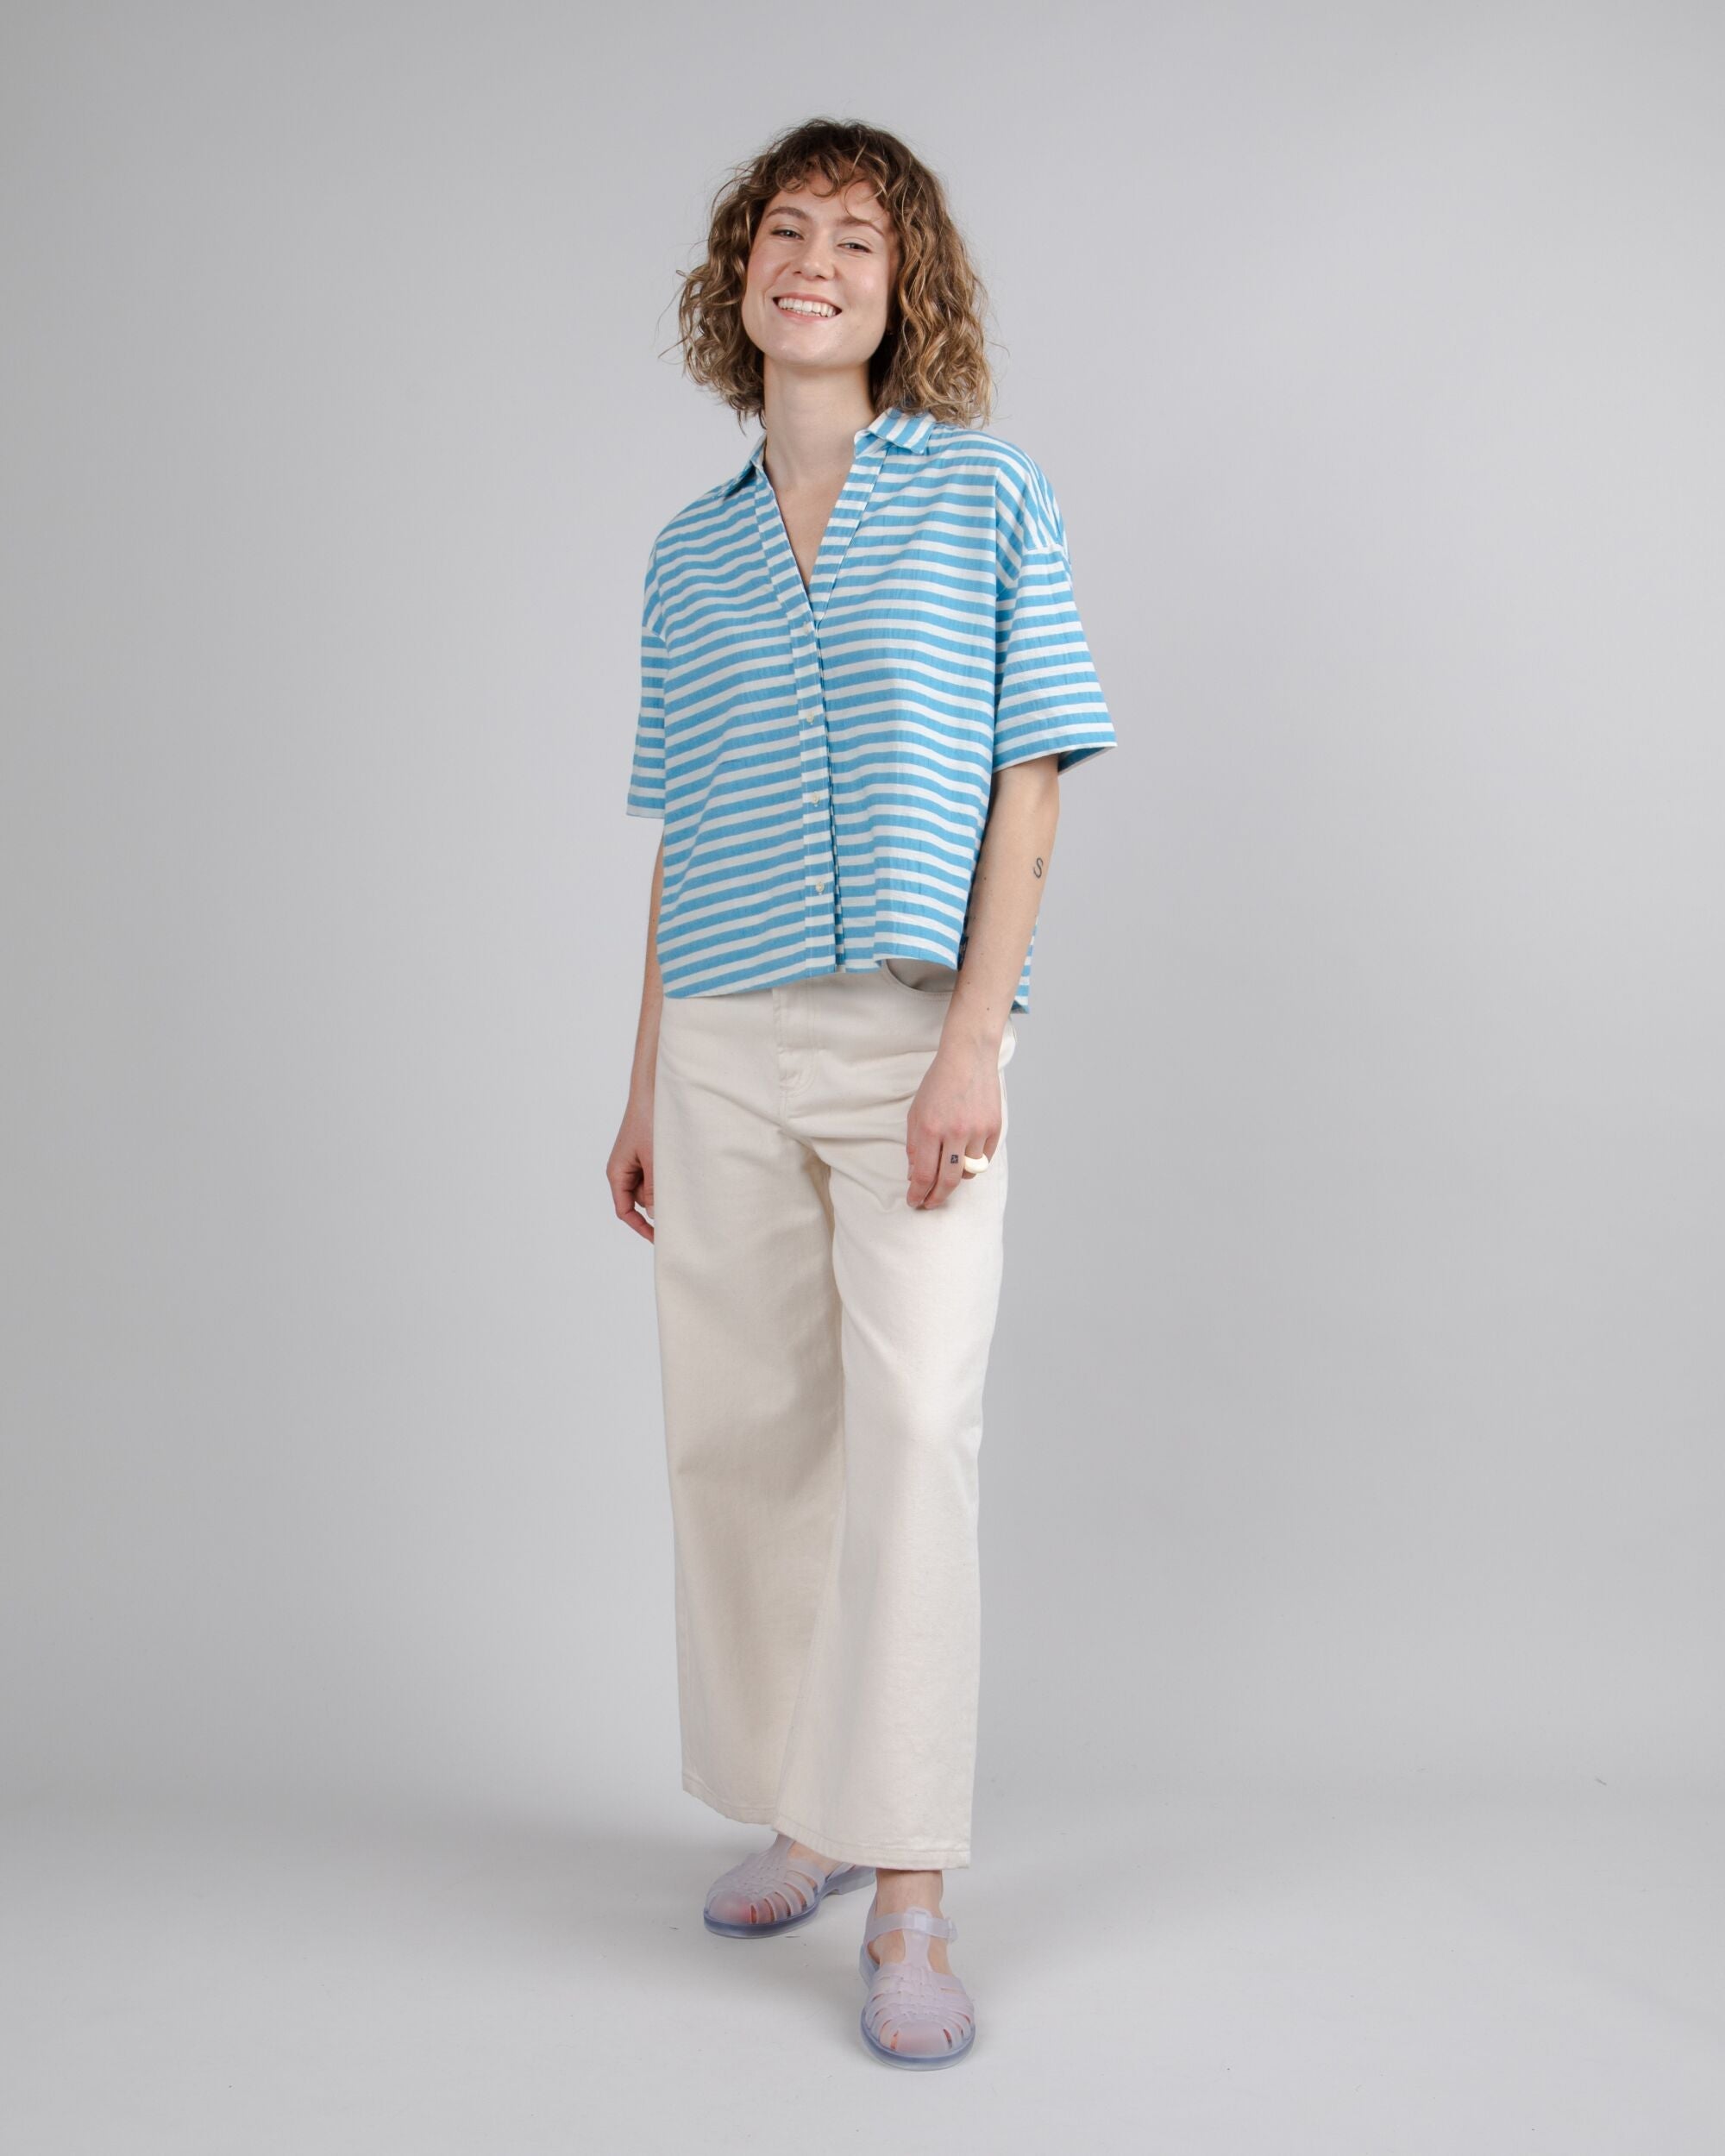 Light blue striped cotton blouse from Brava Fabrics